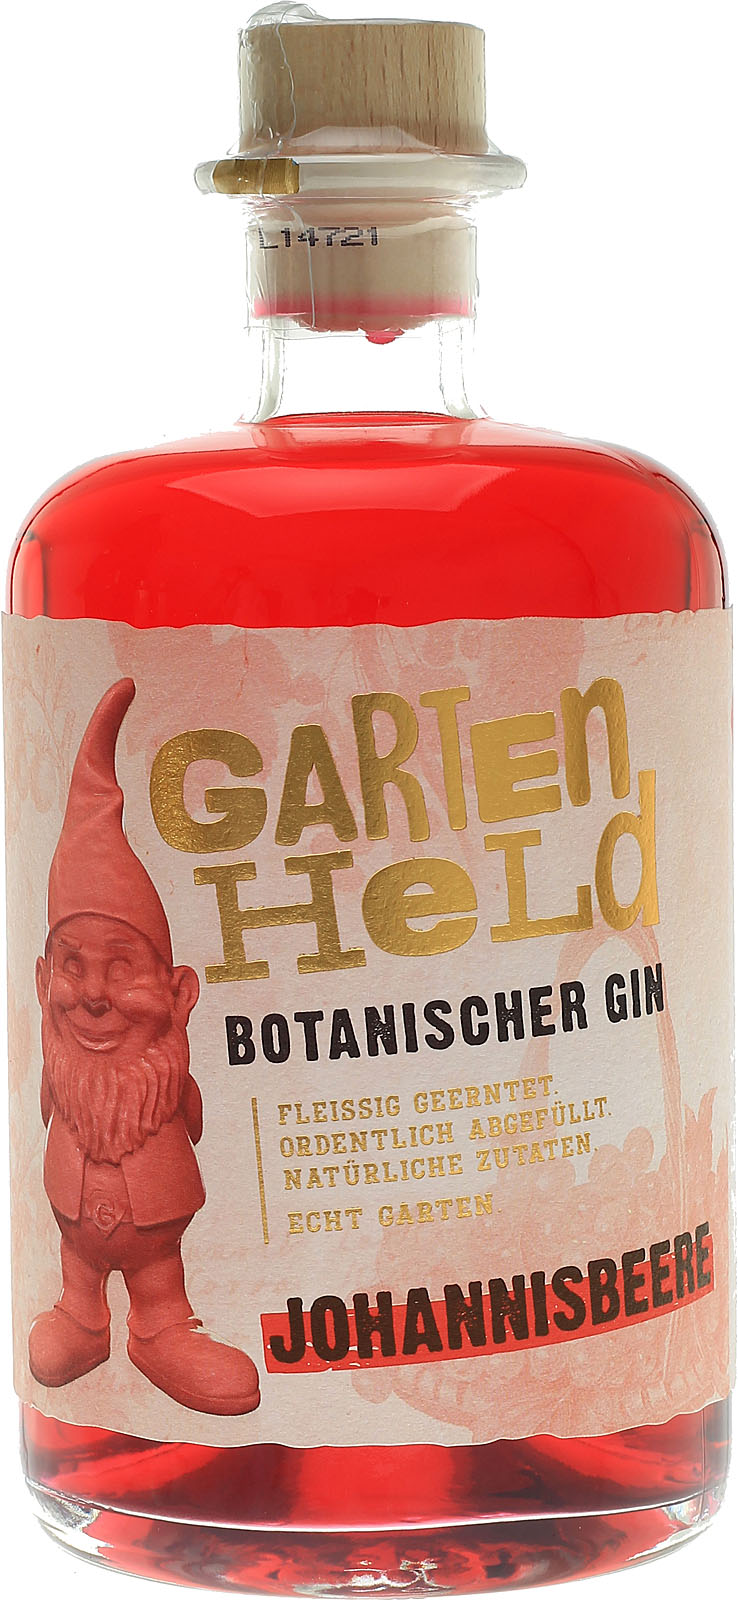 Gartenheld Botanischer Gin Be Liter 0,5 - Johannisbeere